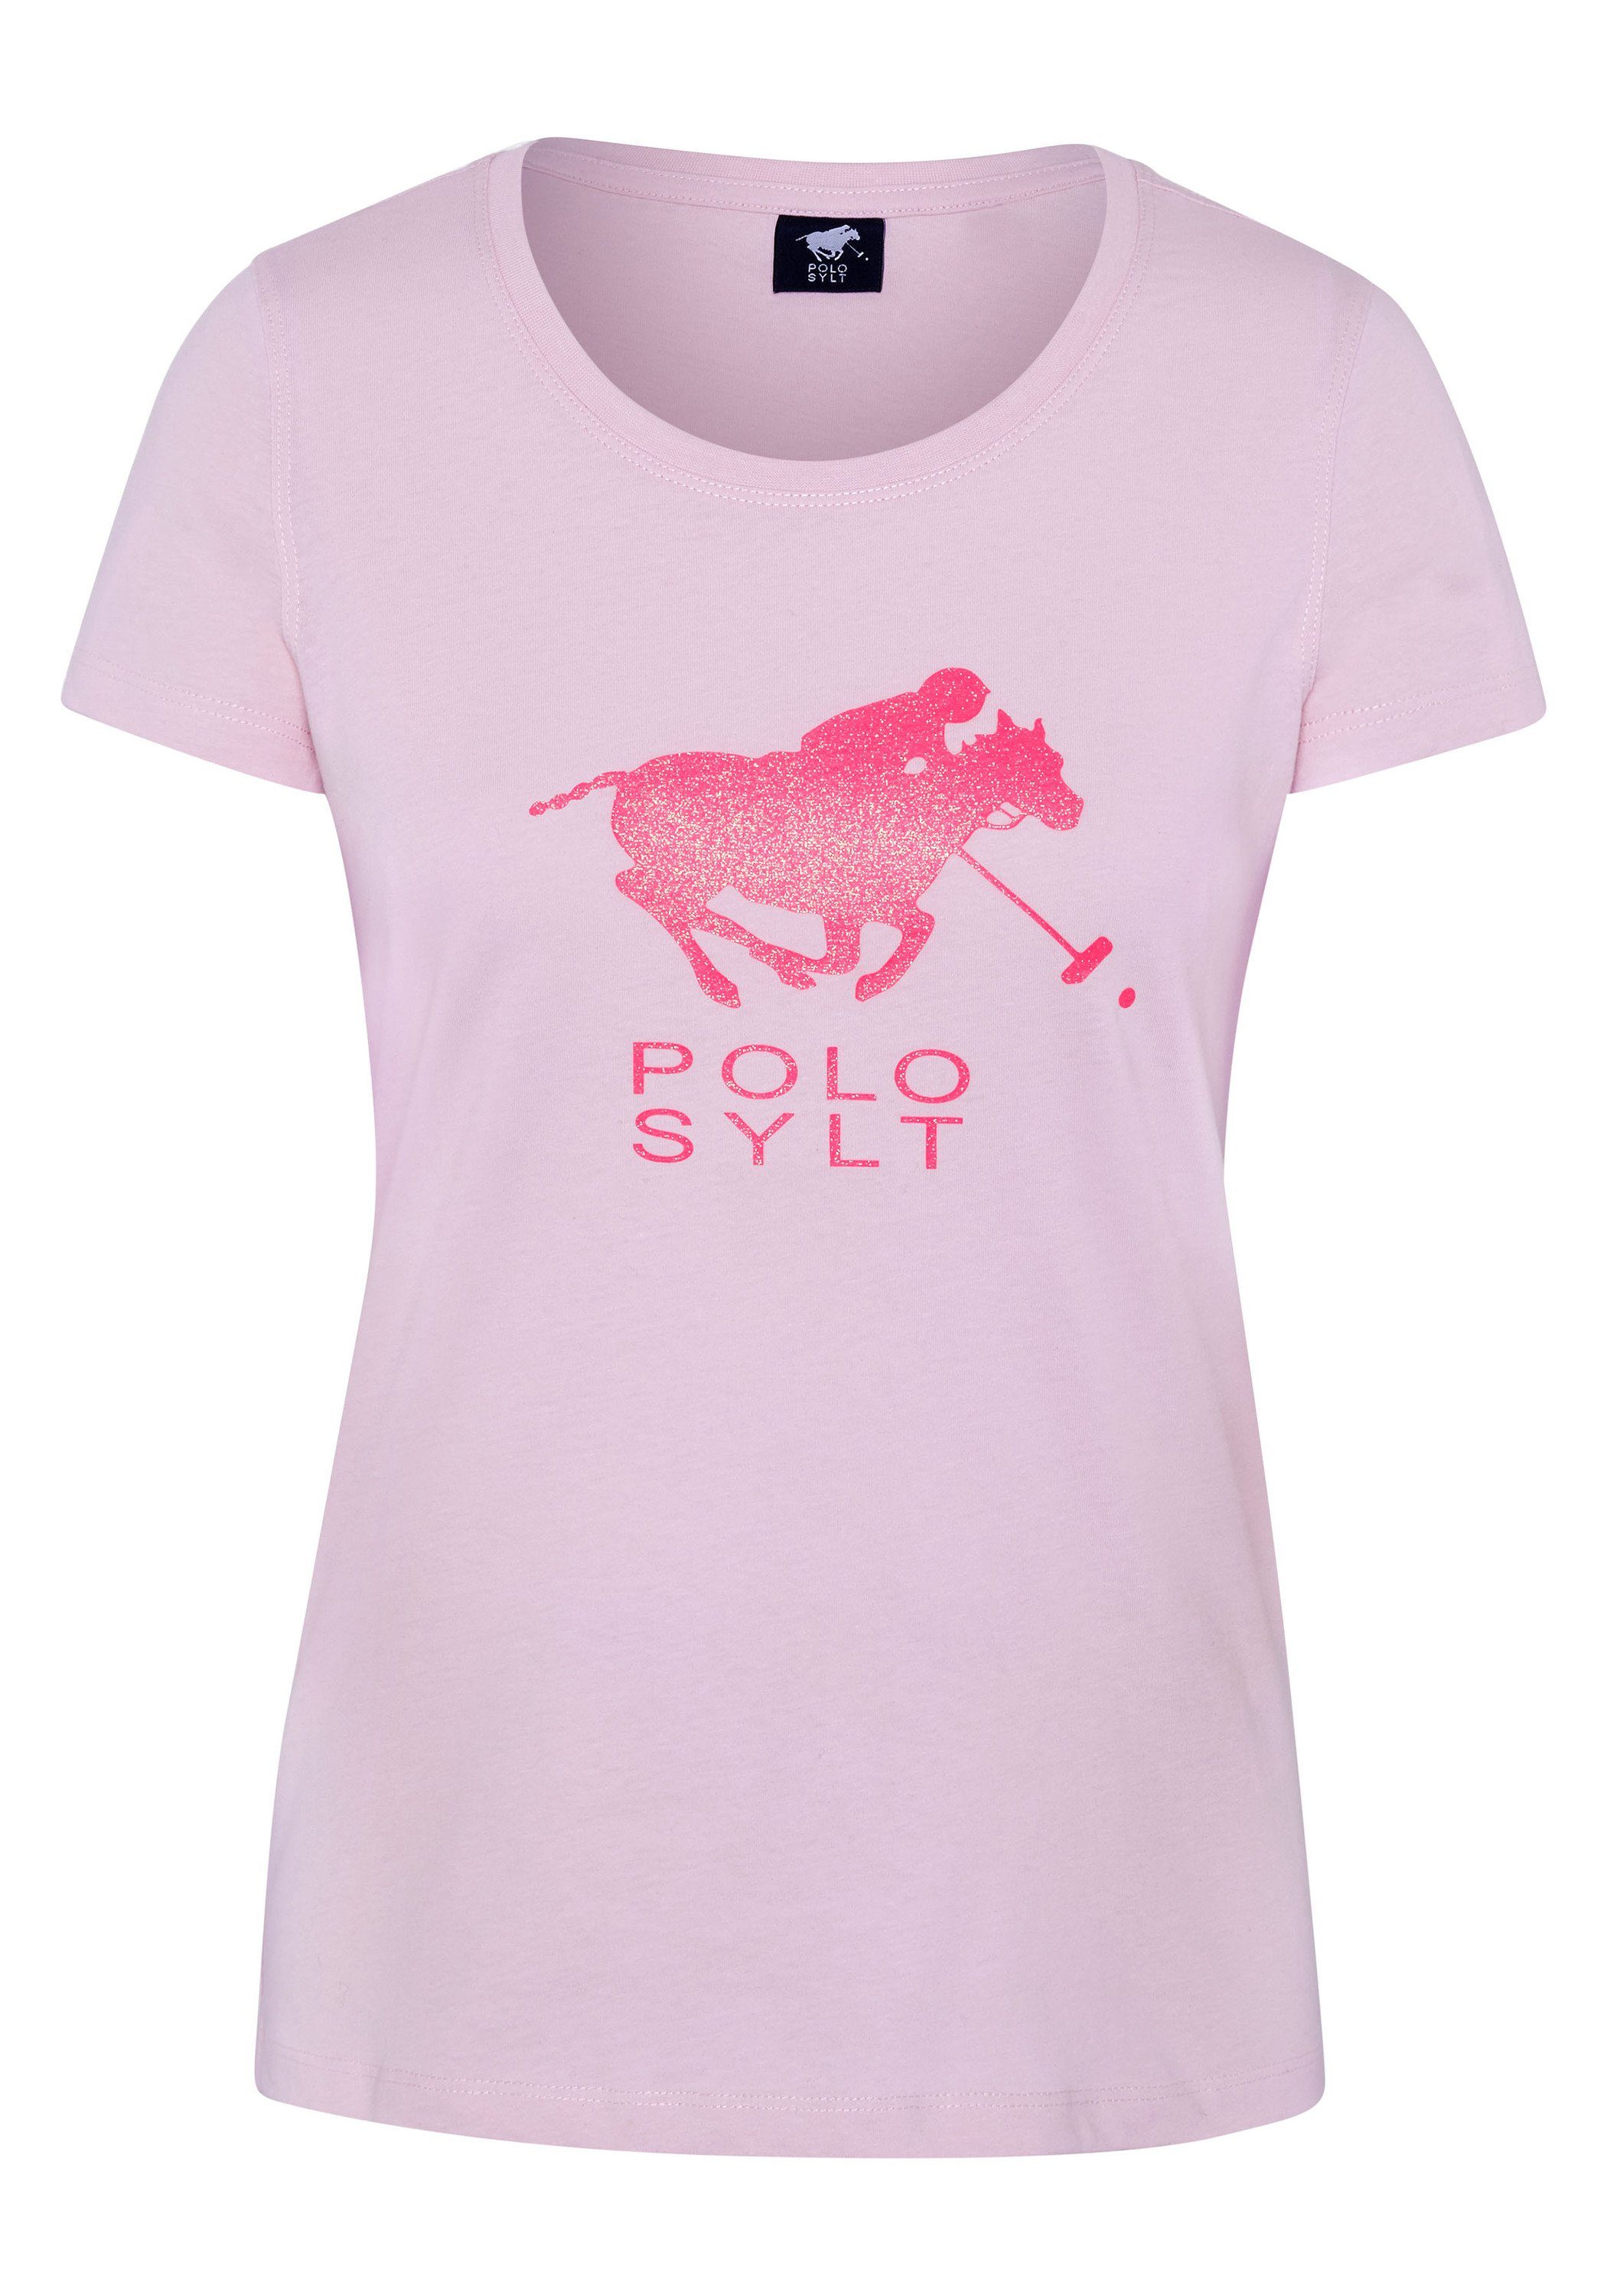 Empfohlen Polo Sylt Print-Shirt in figurbetonter Lady Pink Passform